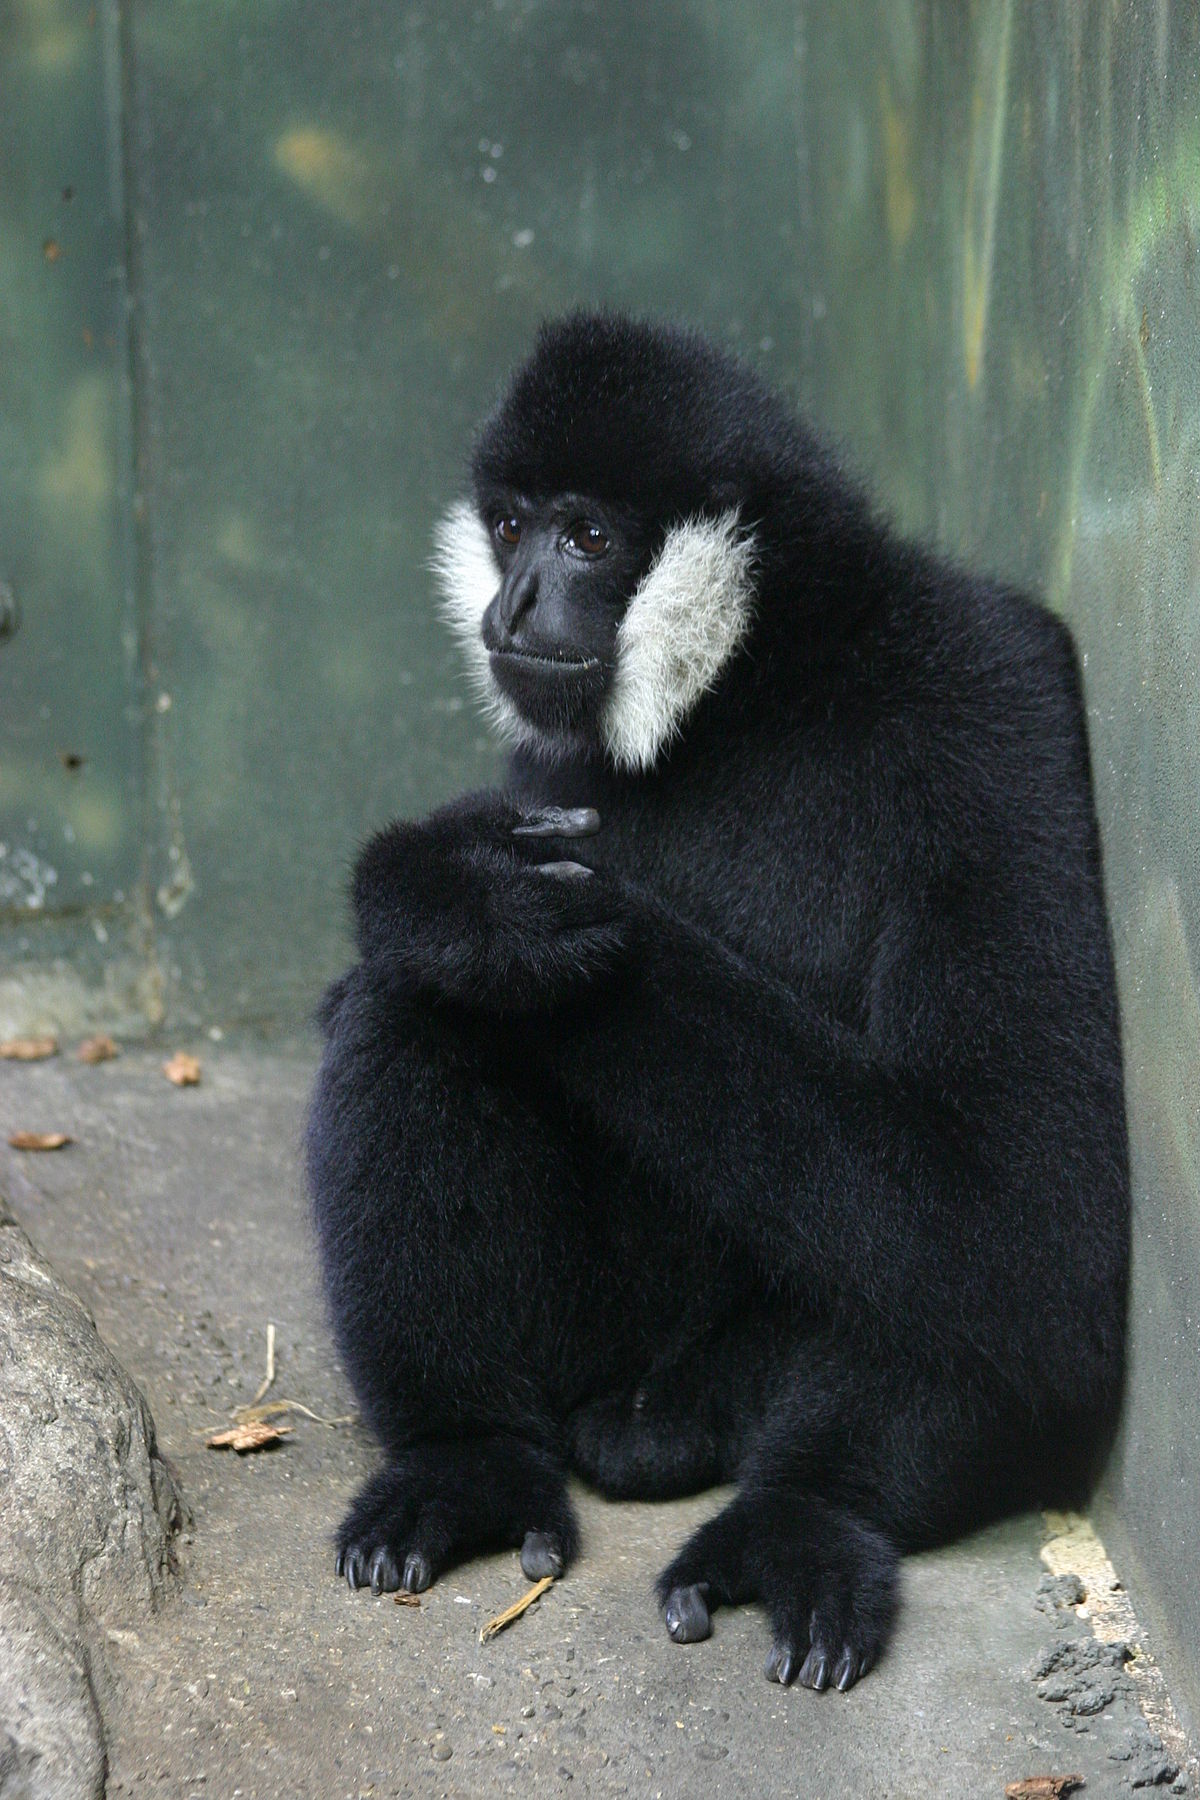 Northern white-cheeked gibbon - Wikipedia